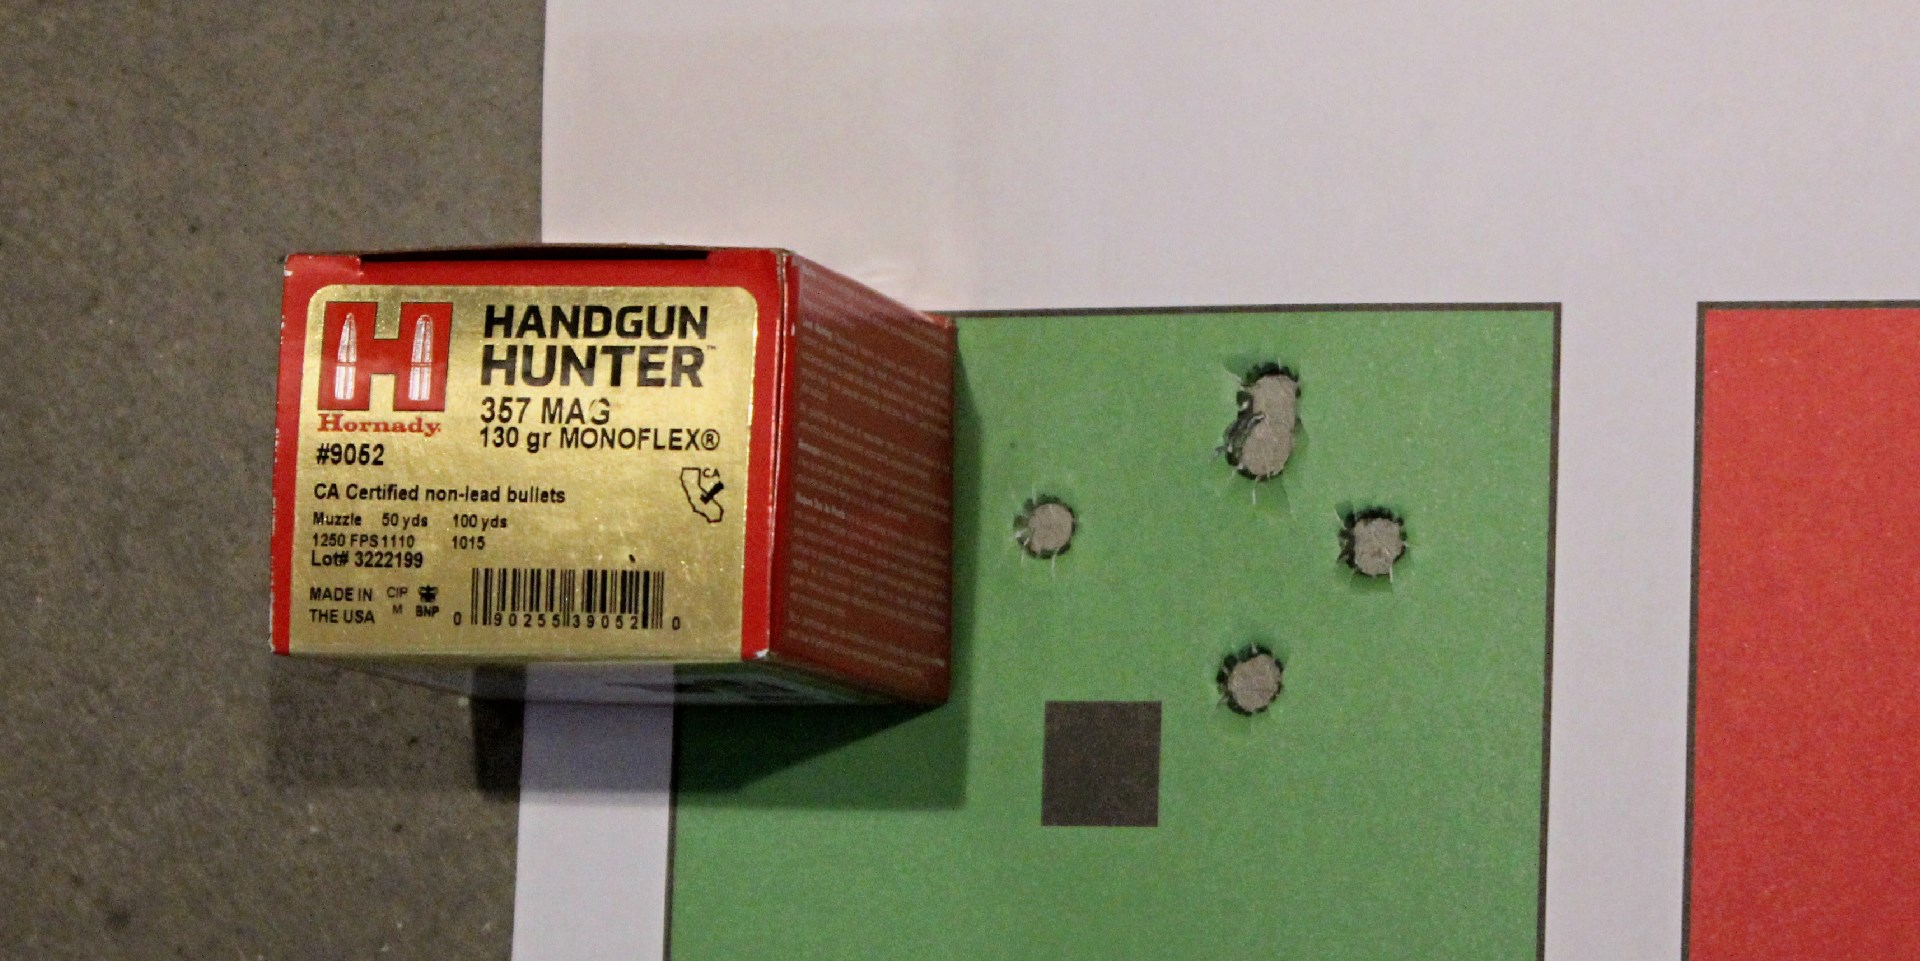 Hornady Handgun Hunter ammunition box target holes shooting accuracy results